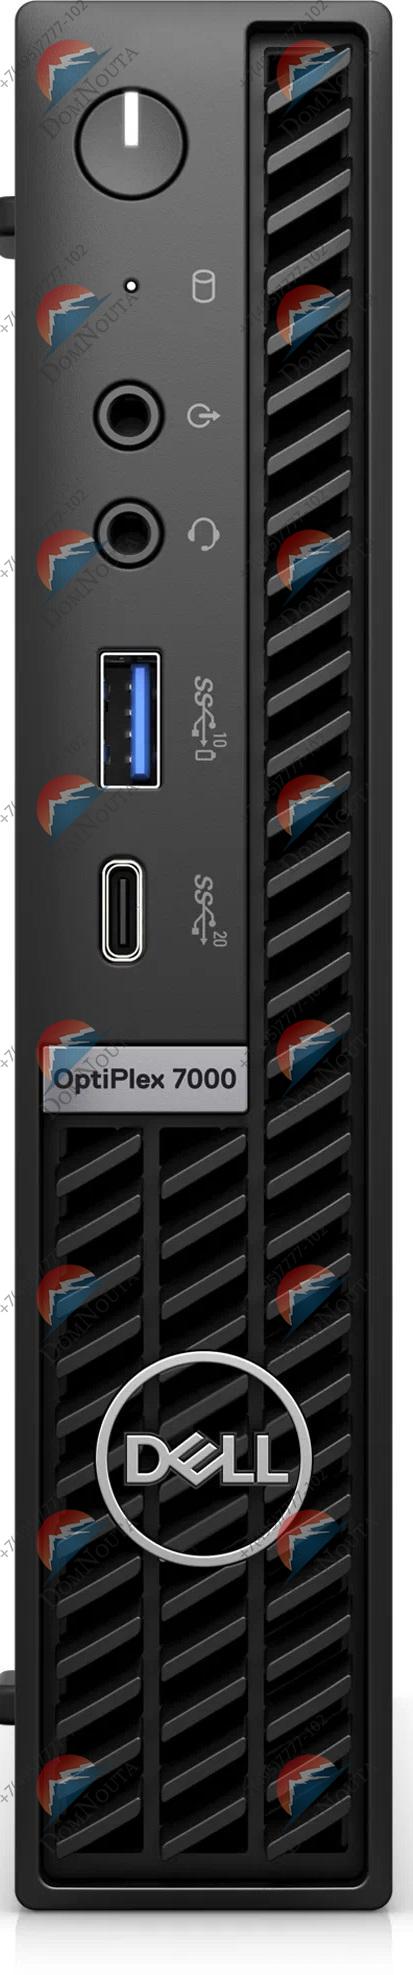 Системный блок Dell OptiPlex 7000 Micro